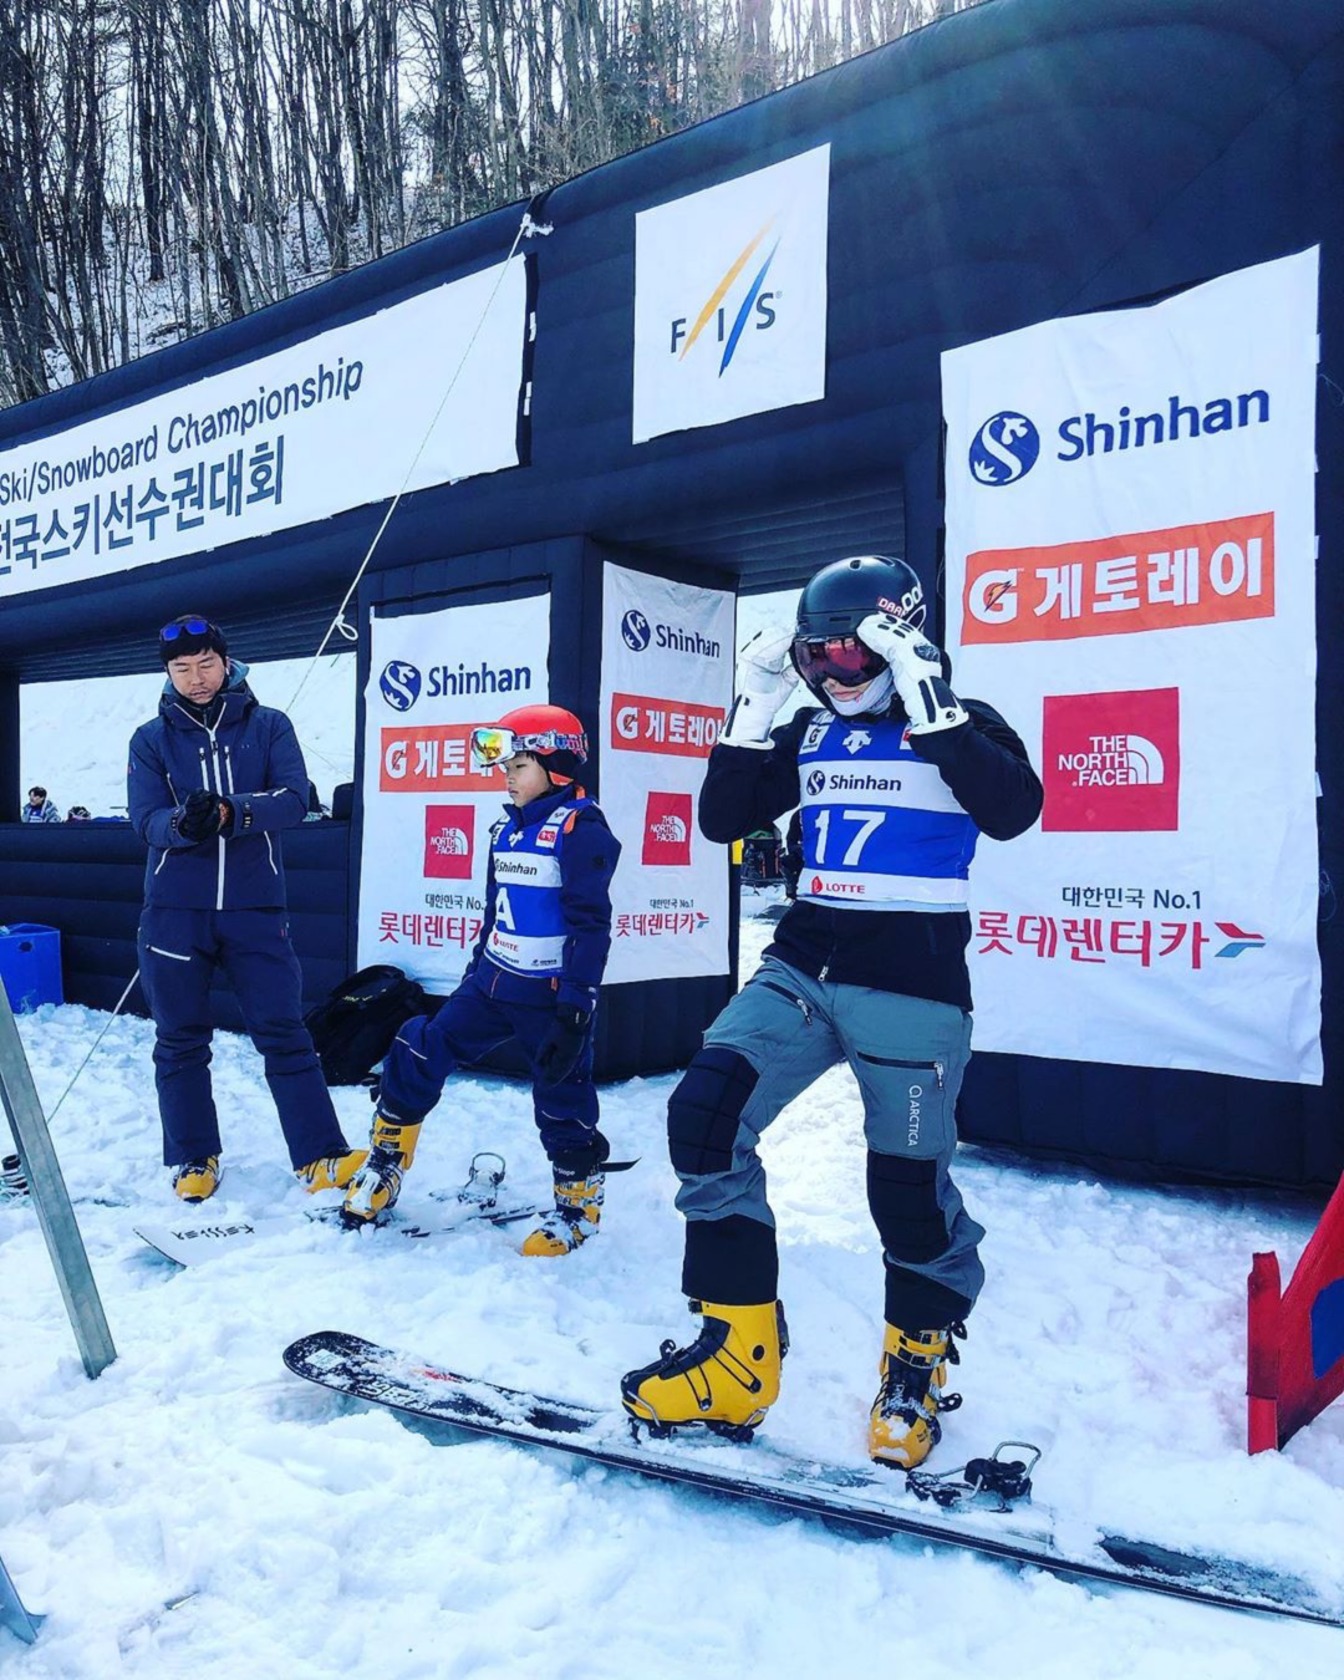 Myles Silverman competing at Phoenix Snow Park in Pyeongchang South Korea